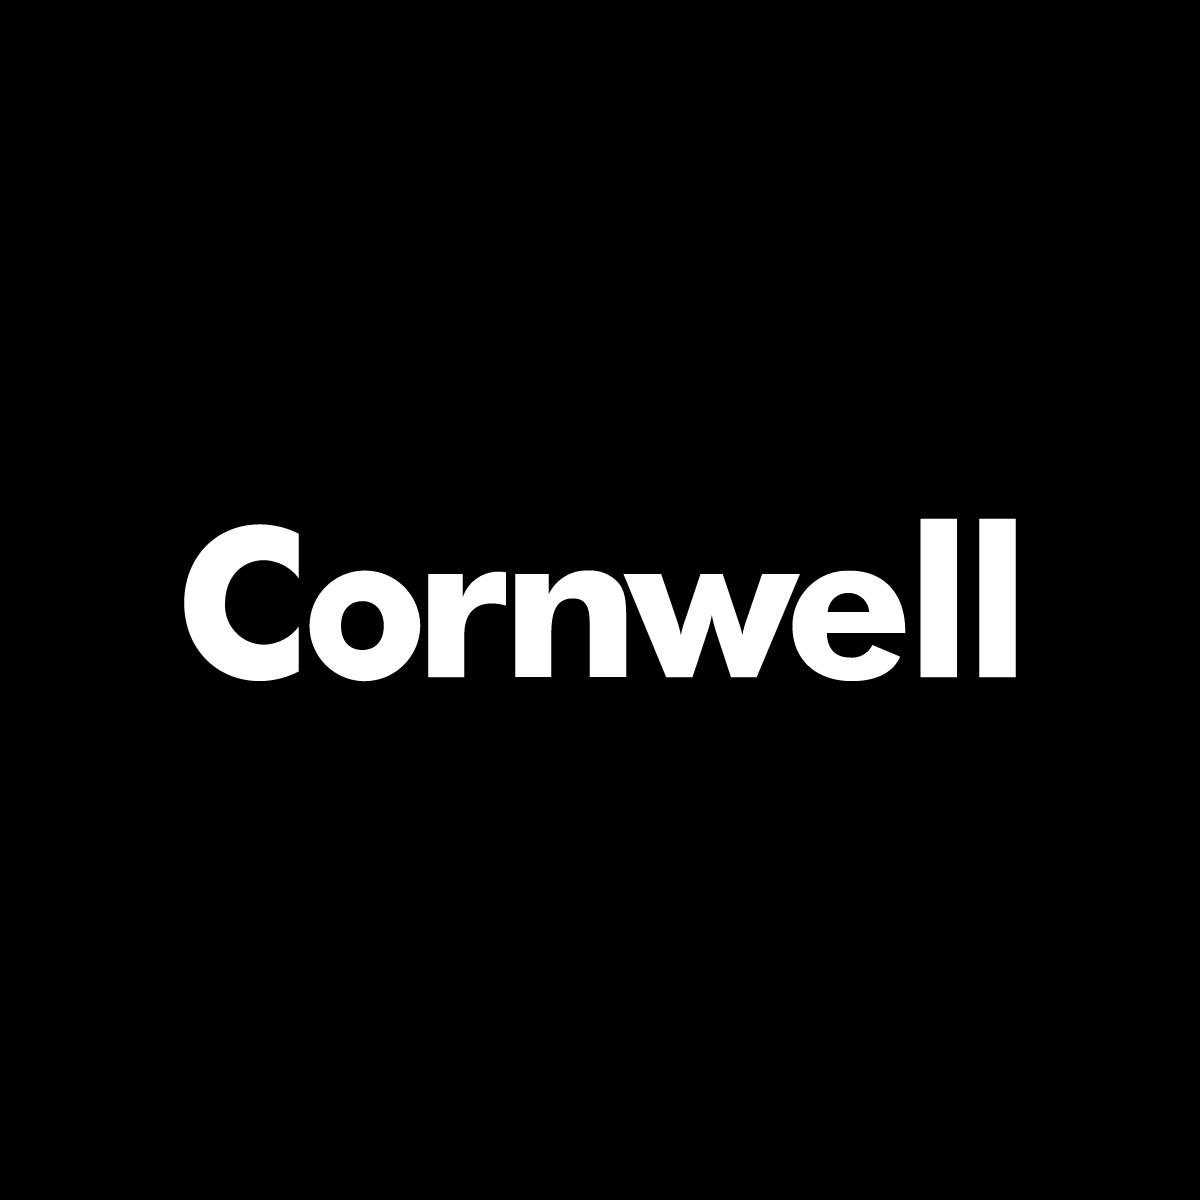 Cornwell Logo - About - Cornwell Brand Design